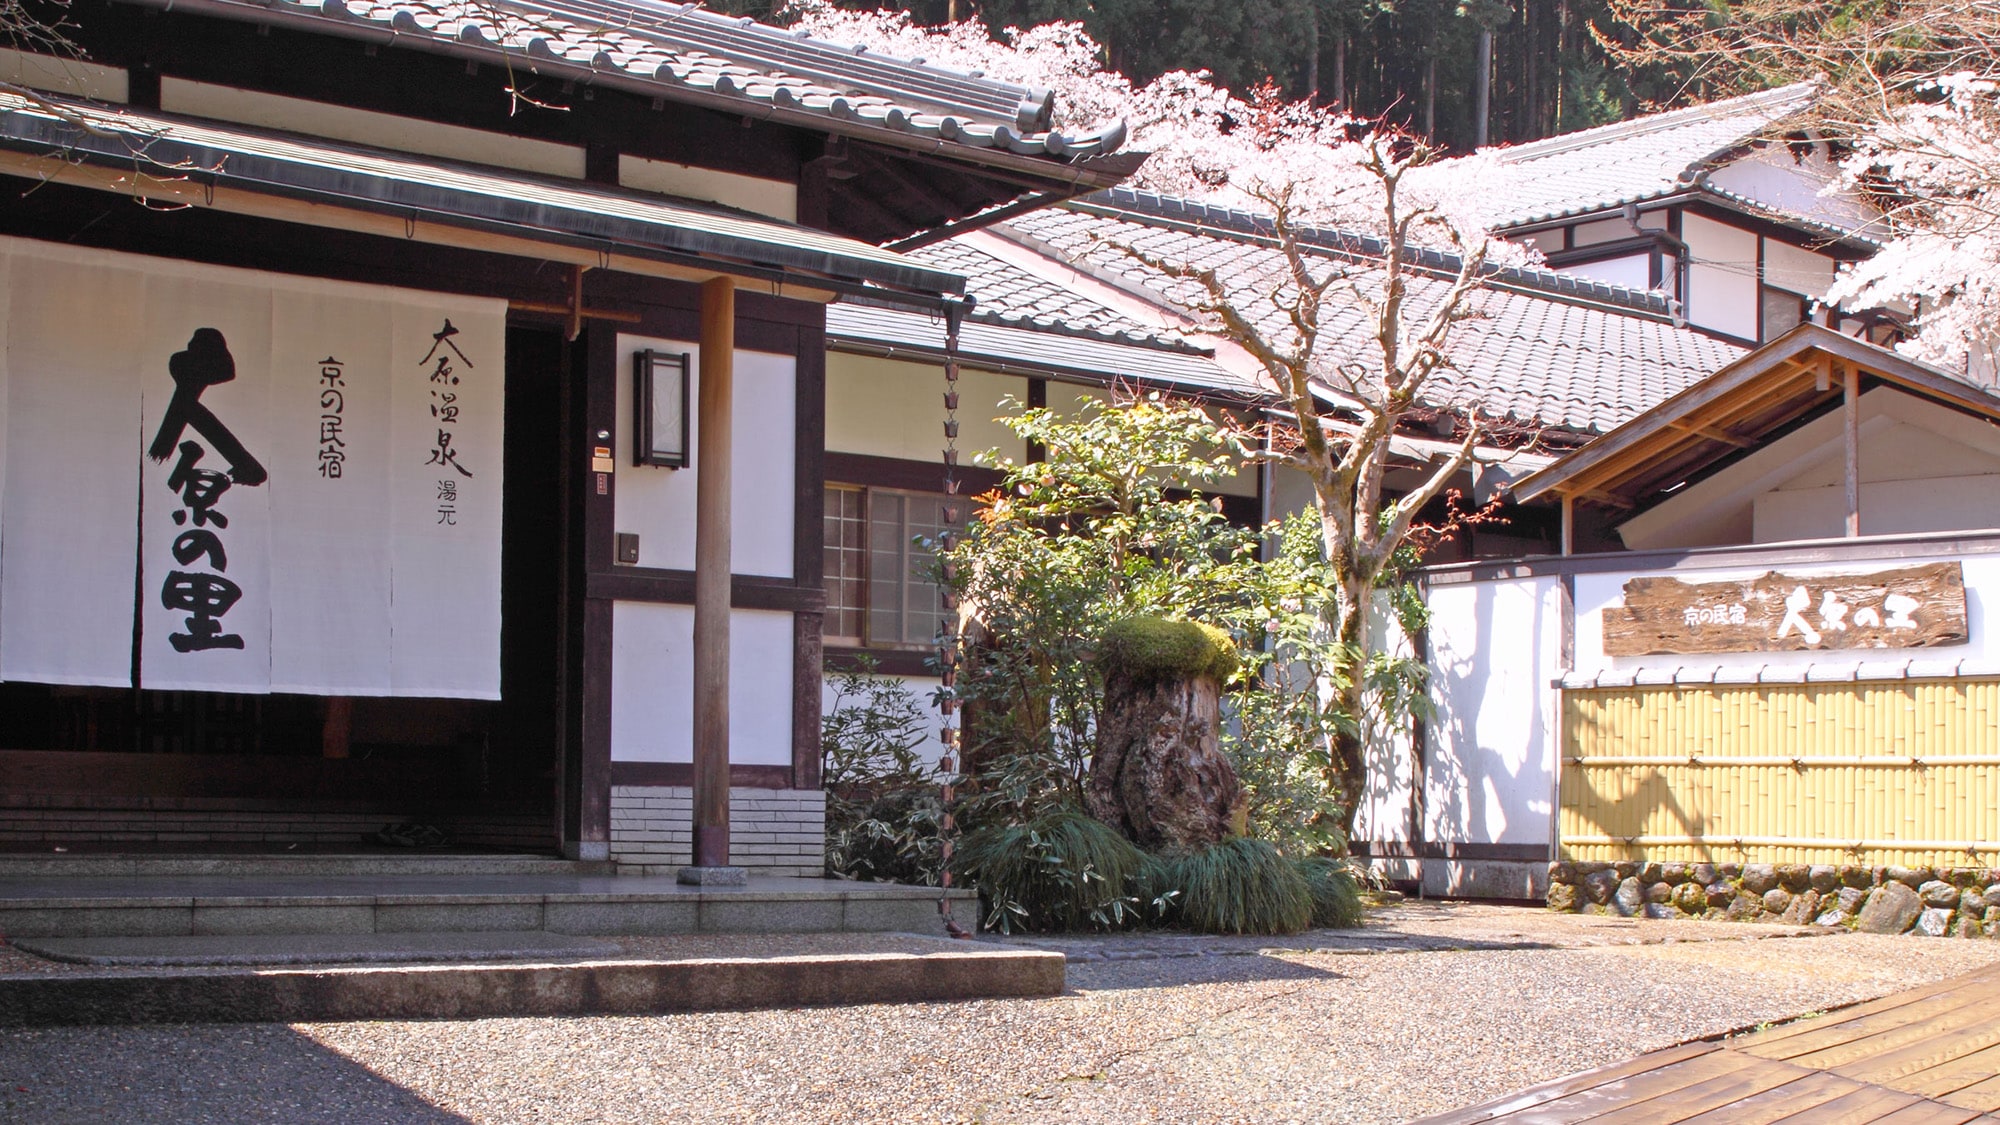 * [Penampilan] Silakan datang ke Ohara di mana bunga sakura menari di musim semi.